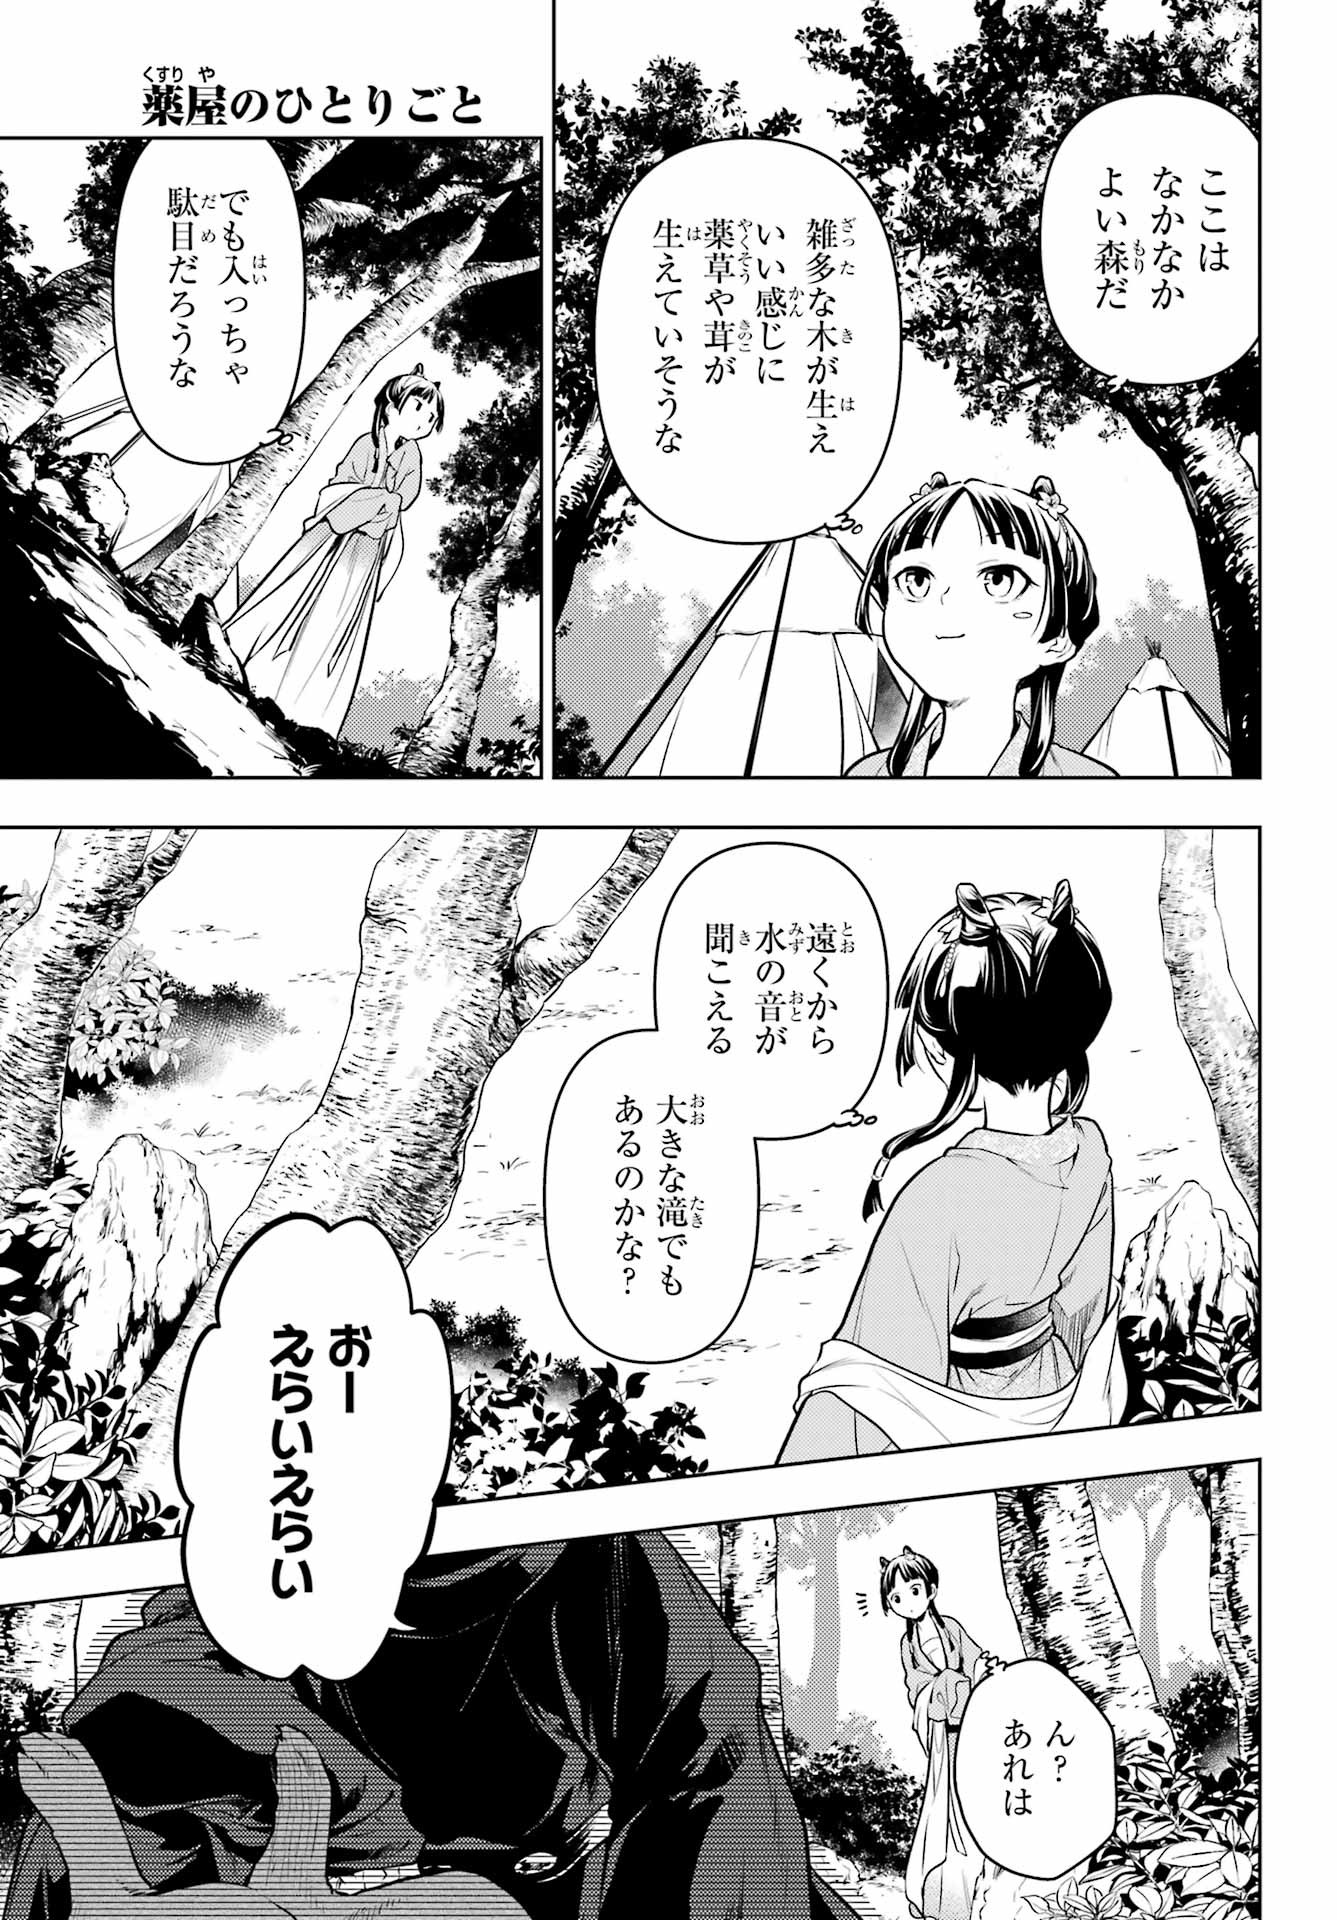 Kusuriya no Hitorigoto - Chapter 61 - Page 5